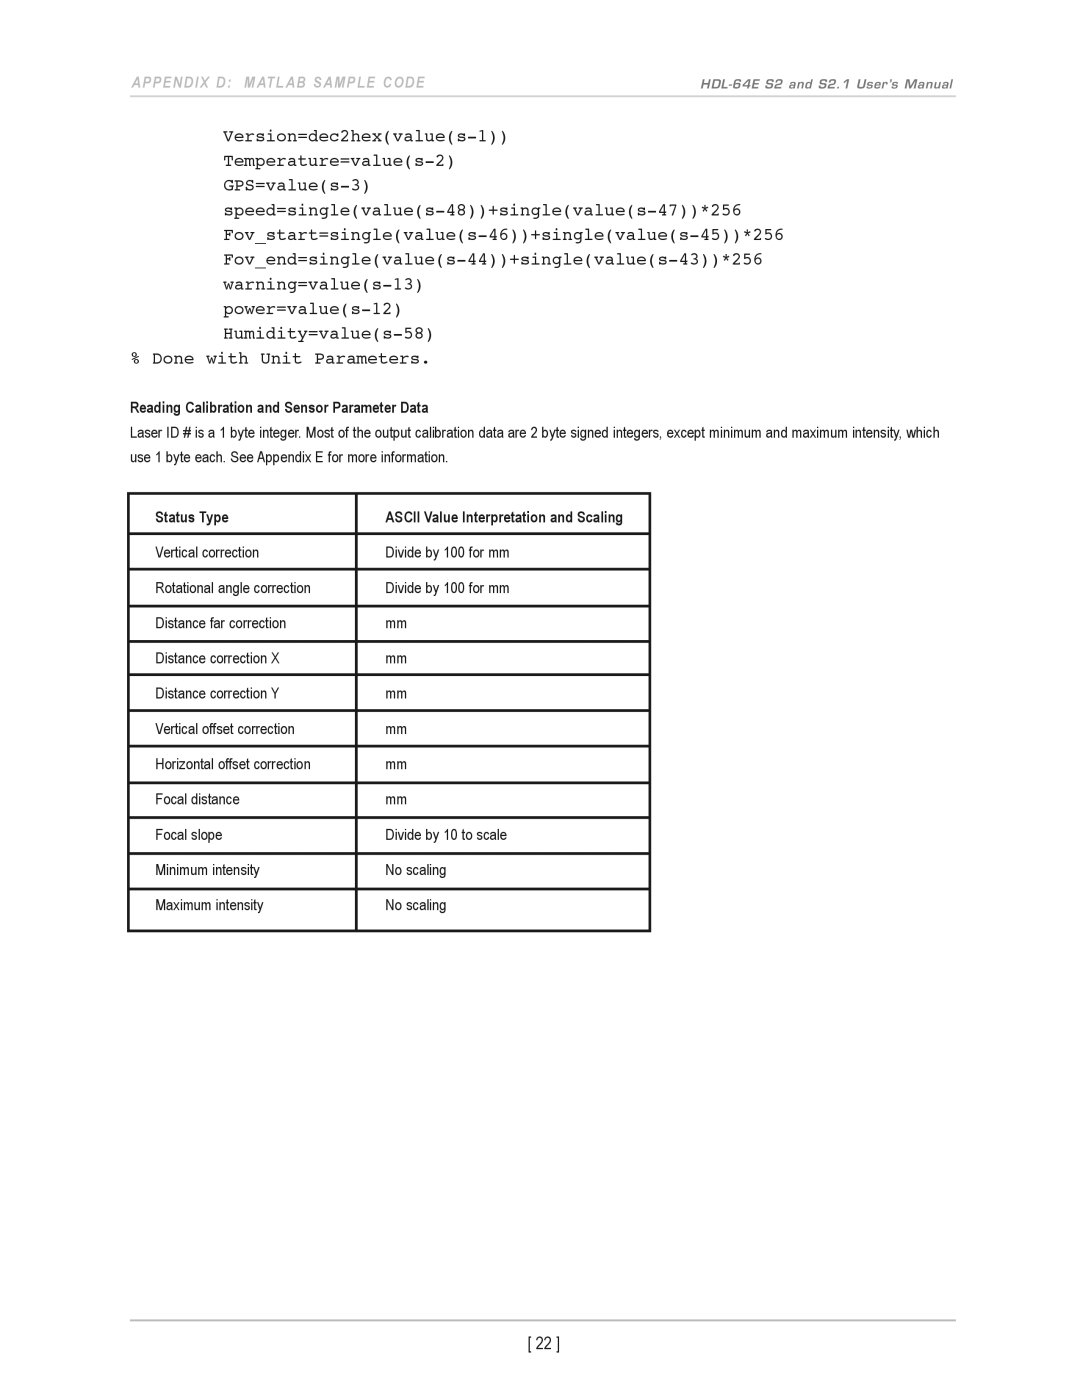 Velodyne Acoustics HDL-64E S2.1 user manual Reading Calibration and Sensor Parameter Data 